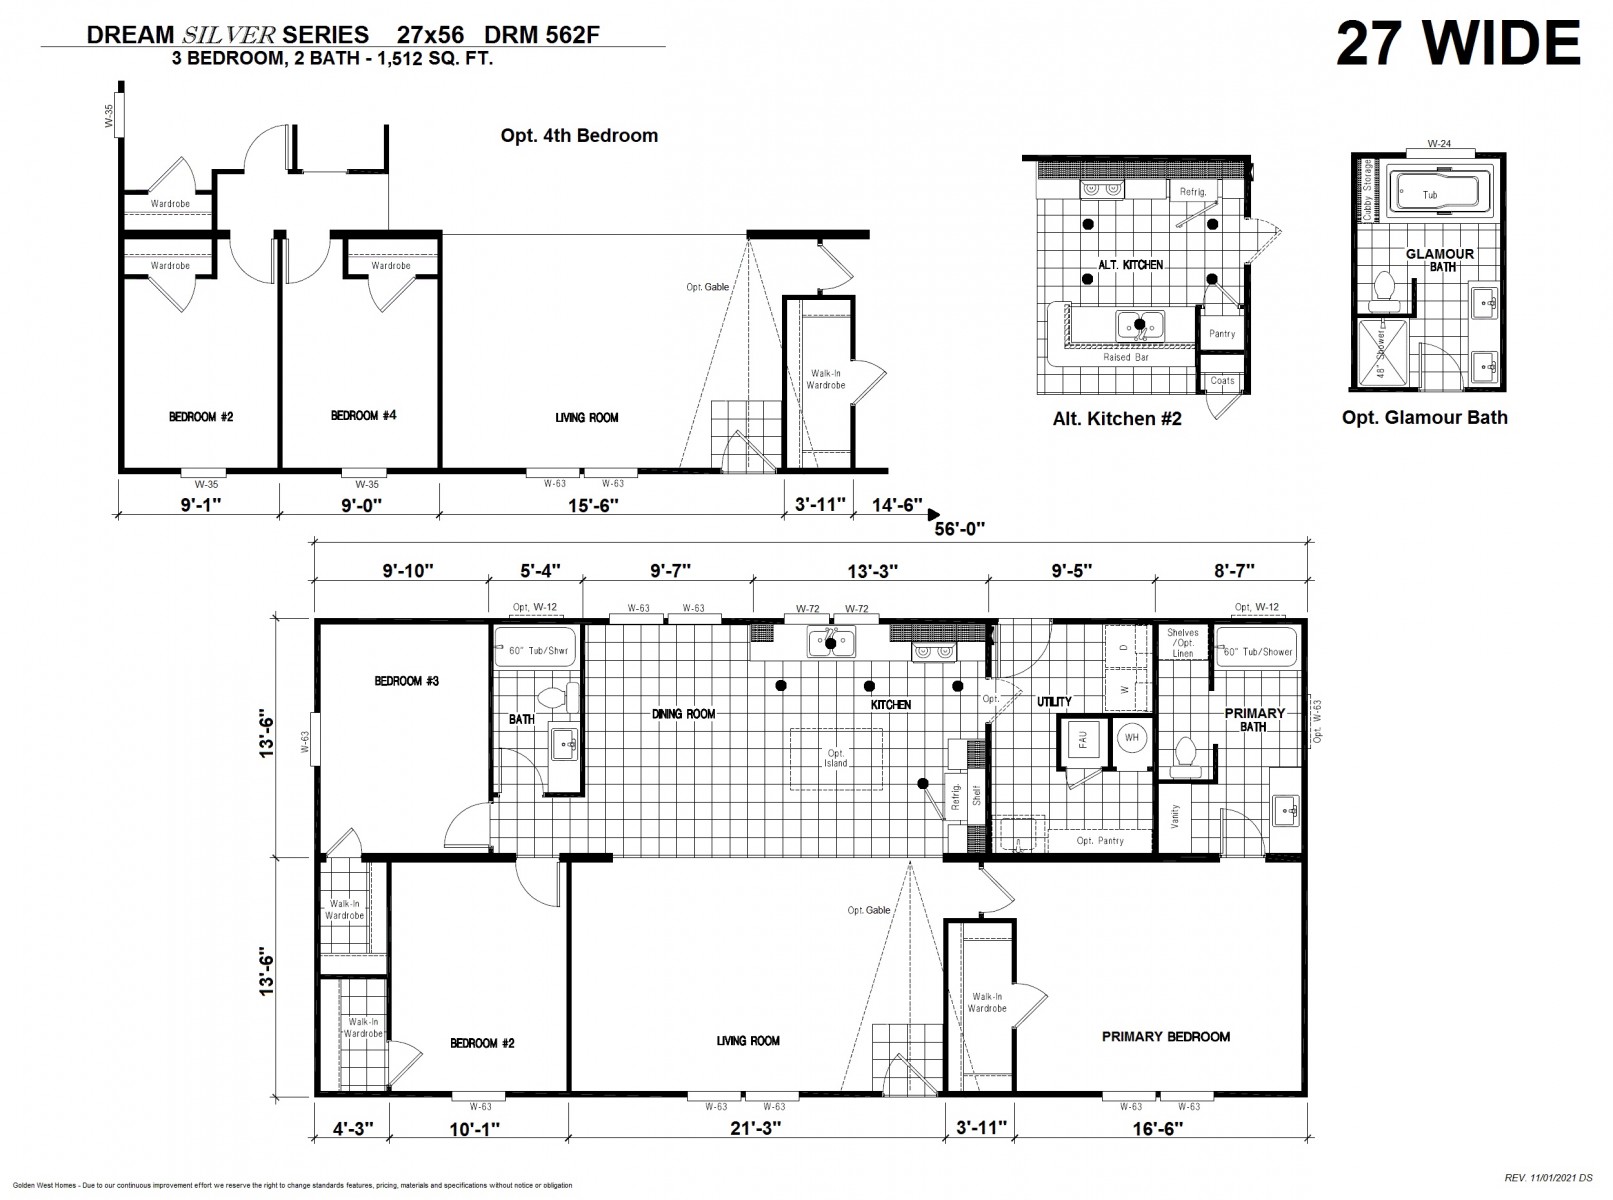 Homes Direct Modular Homes - Model DRM562F - Floorplan